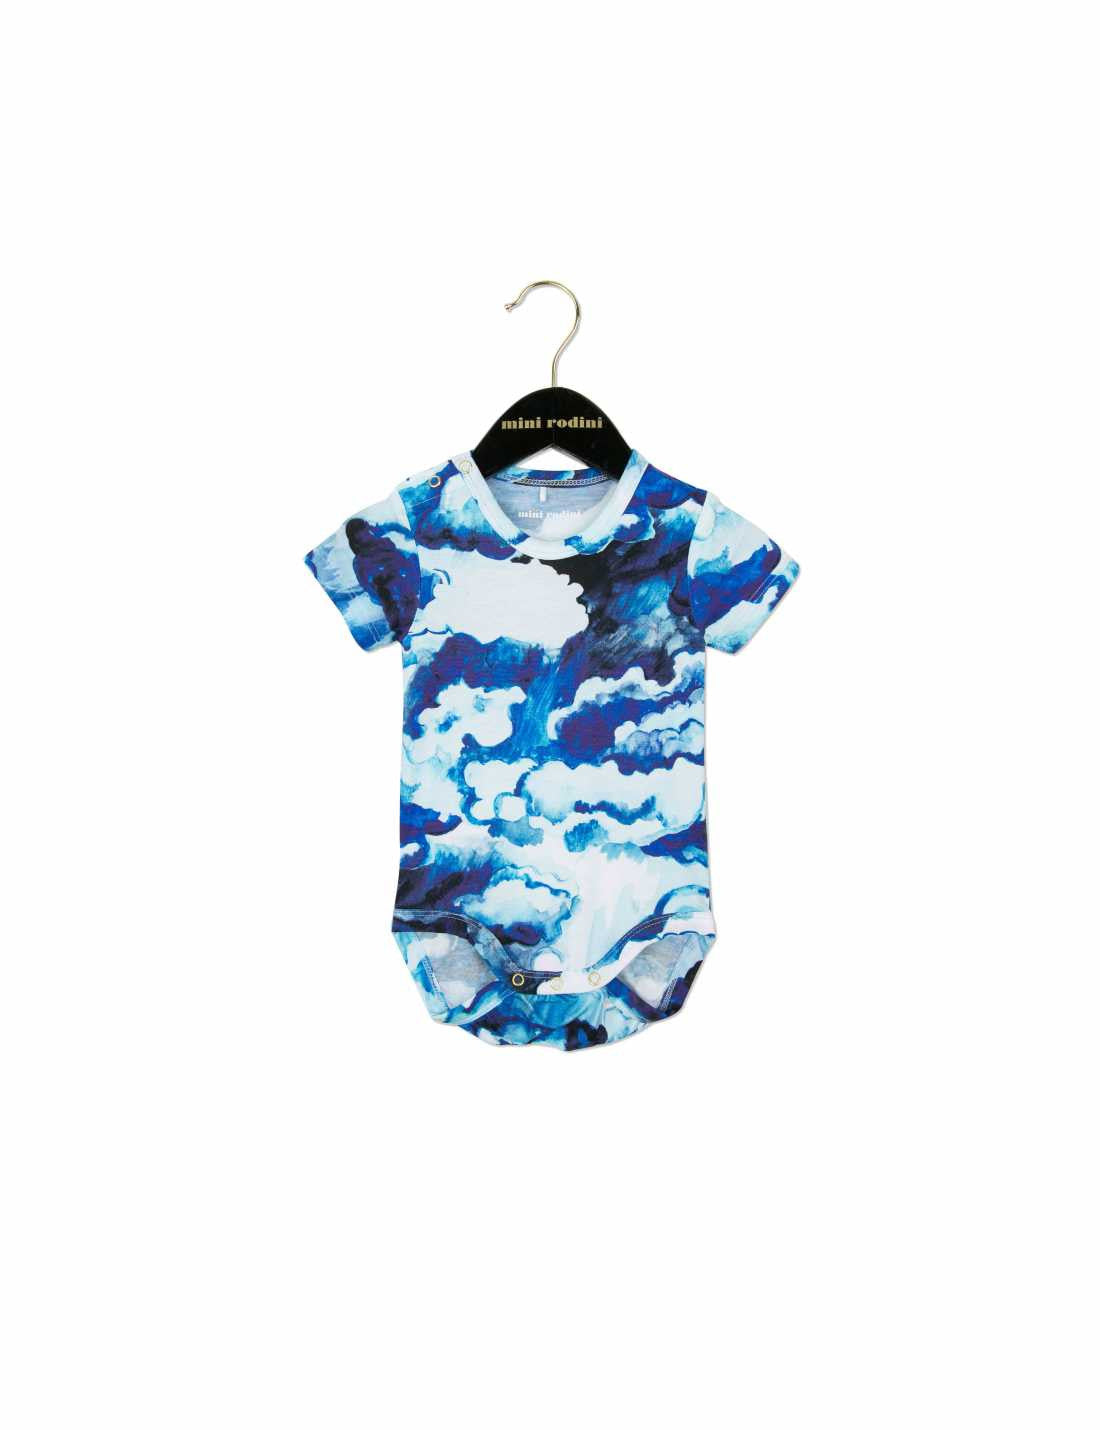 Baby Dark Blue Seas Of Clouds Printed Bodysuit - CÉMAROSE | Children's Fashion Store - 1